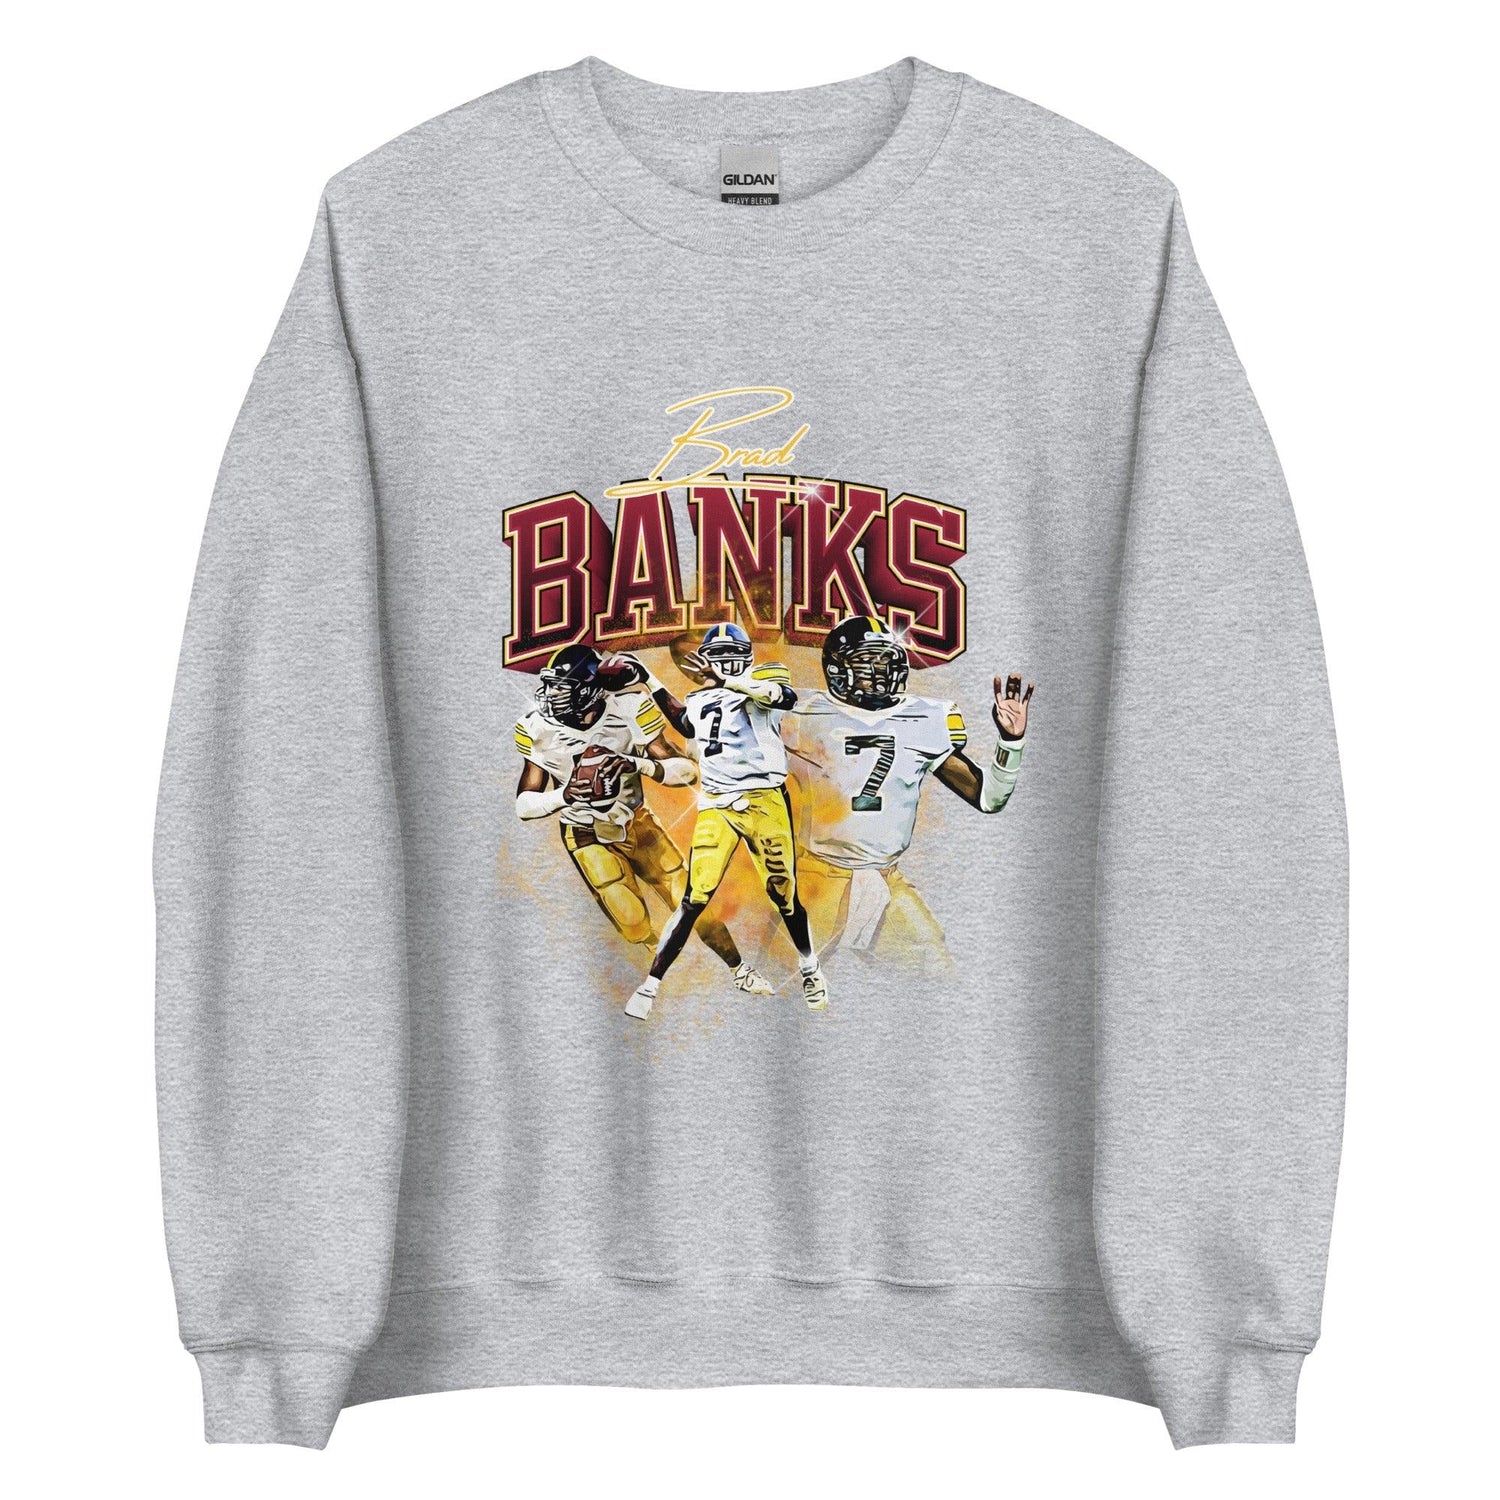 Brad Banks "Vintage" Sweatshirt - Fan Arch